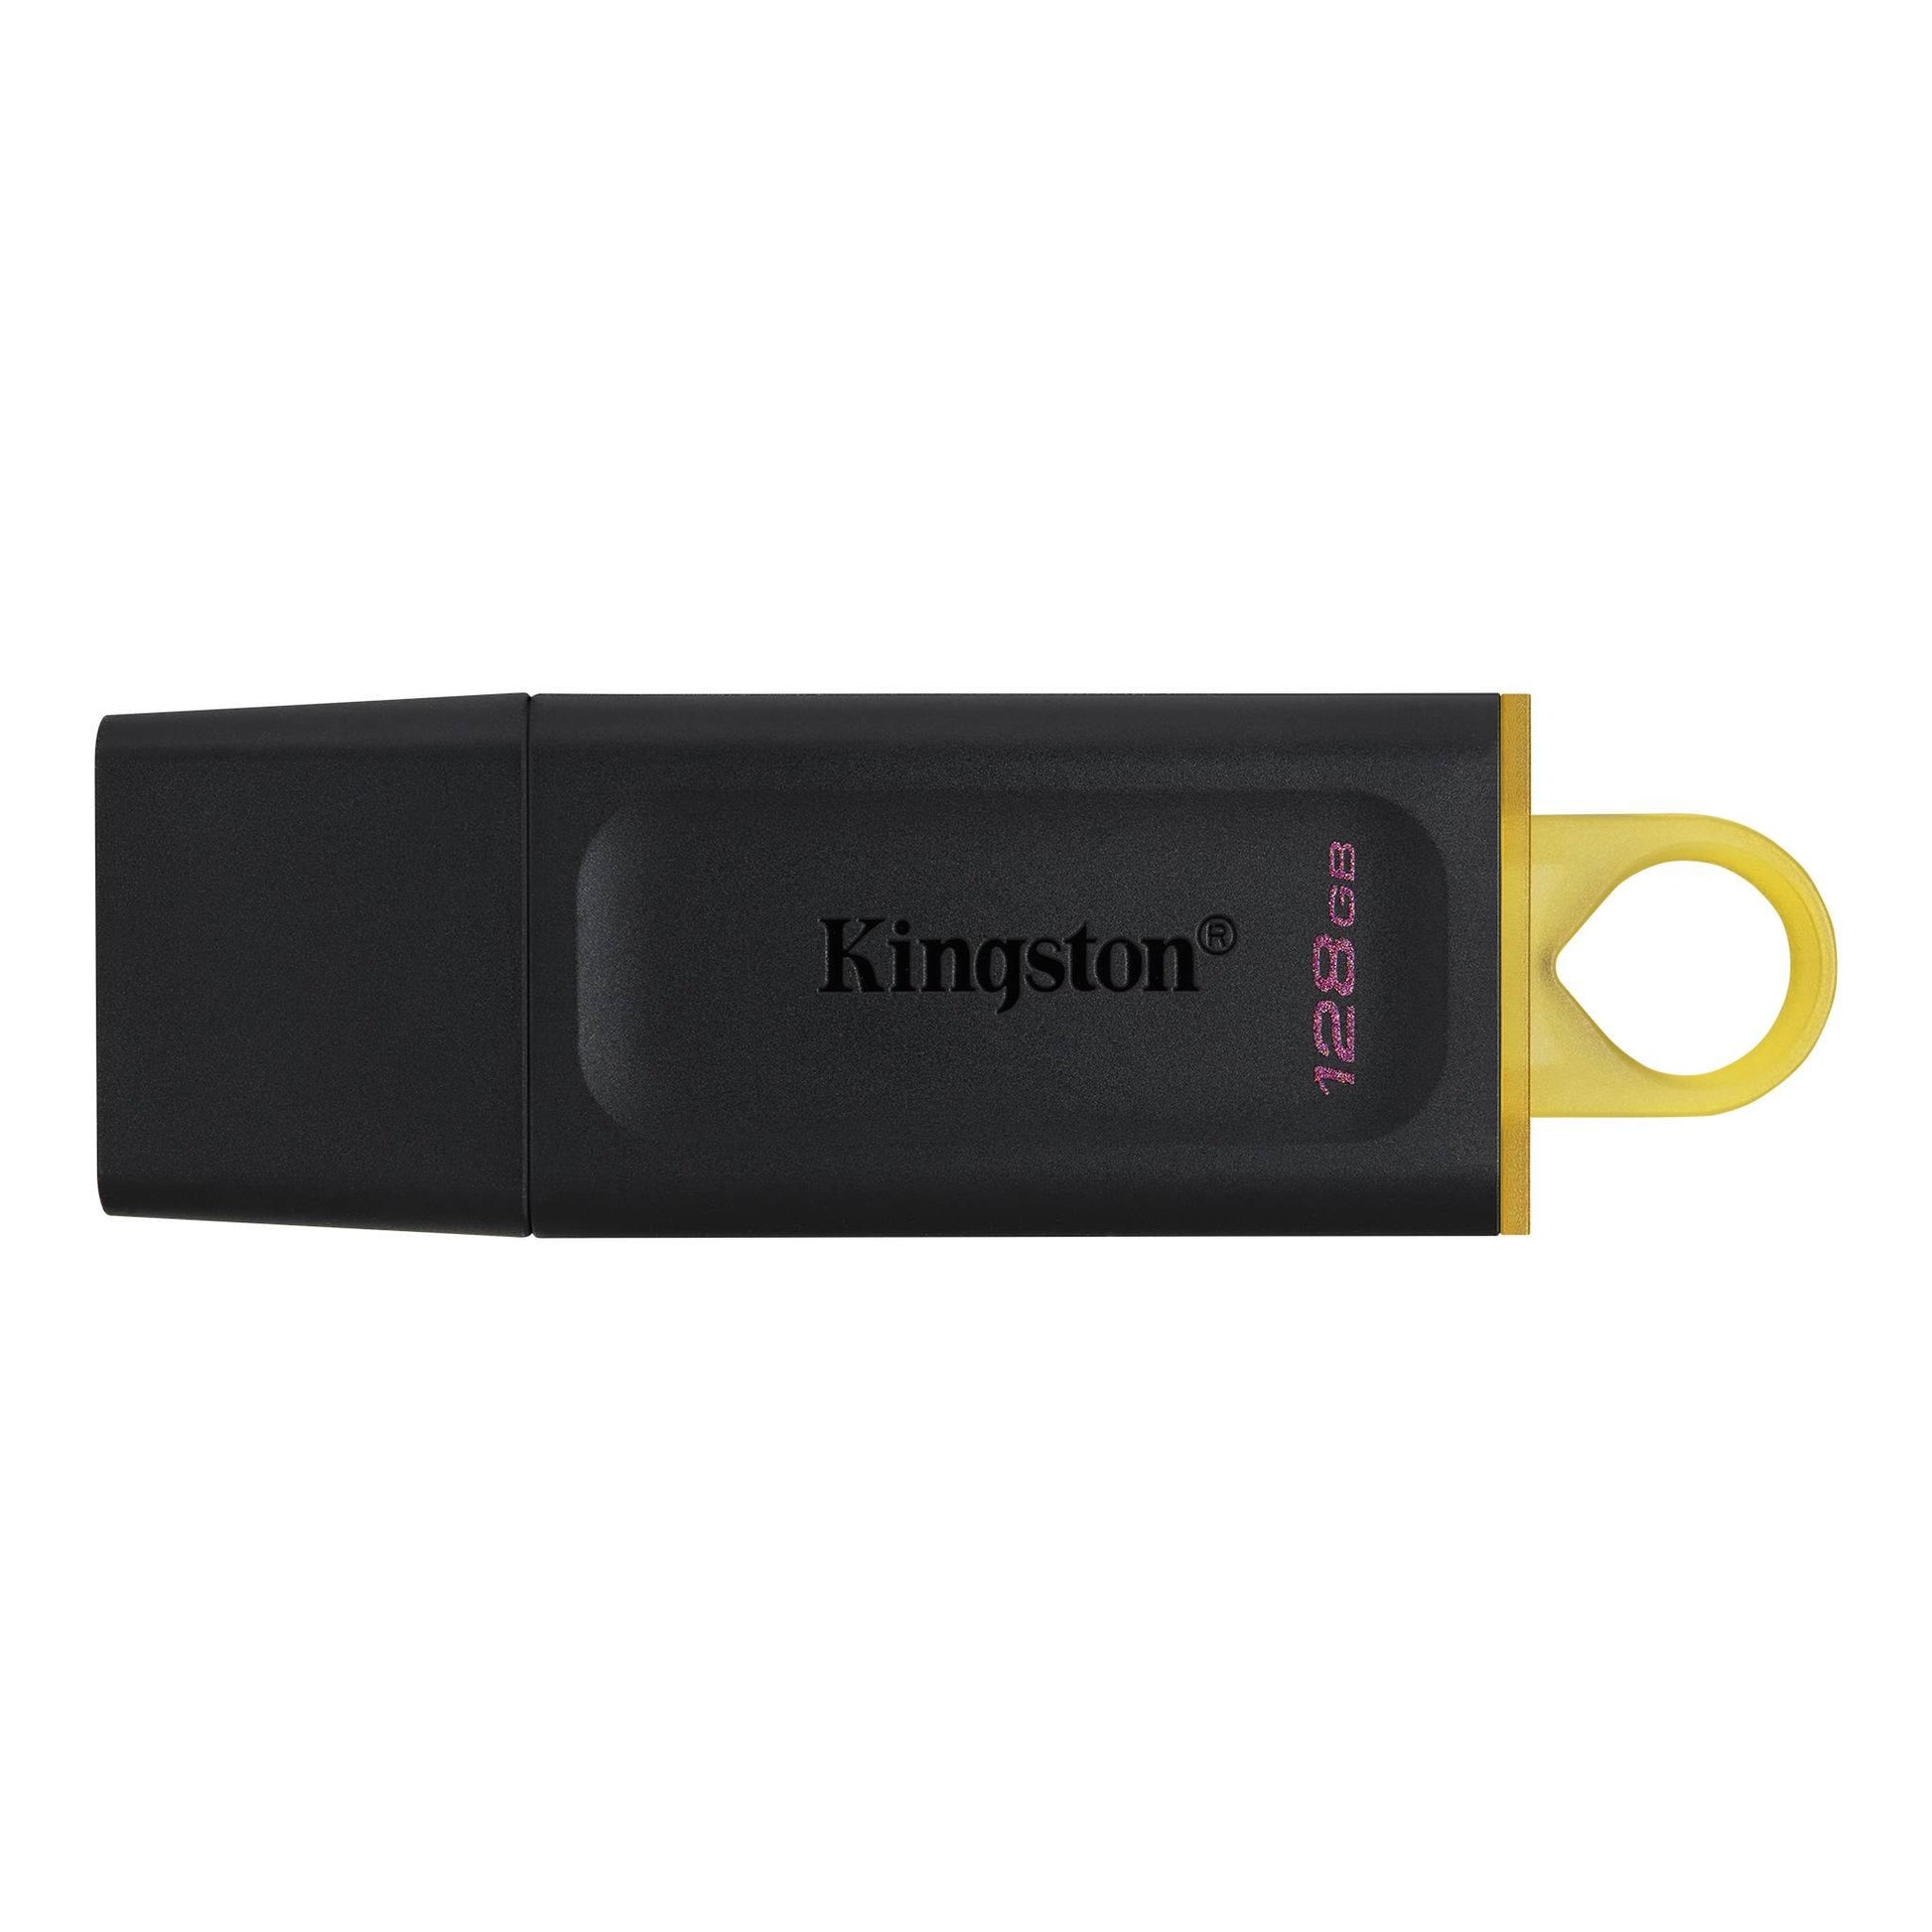 KINGSTON DATATRAVELER EXODIA USB 128GB FLASH DRIVE - netgear-gi